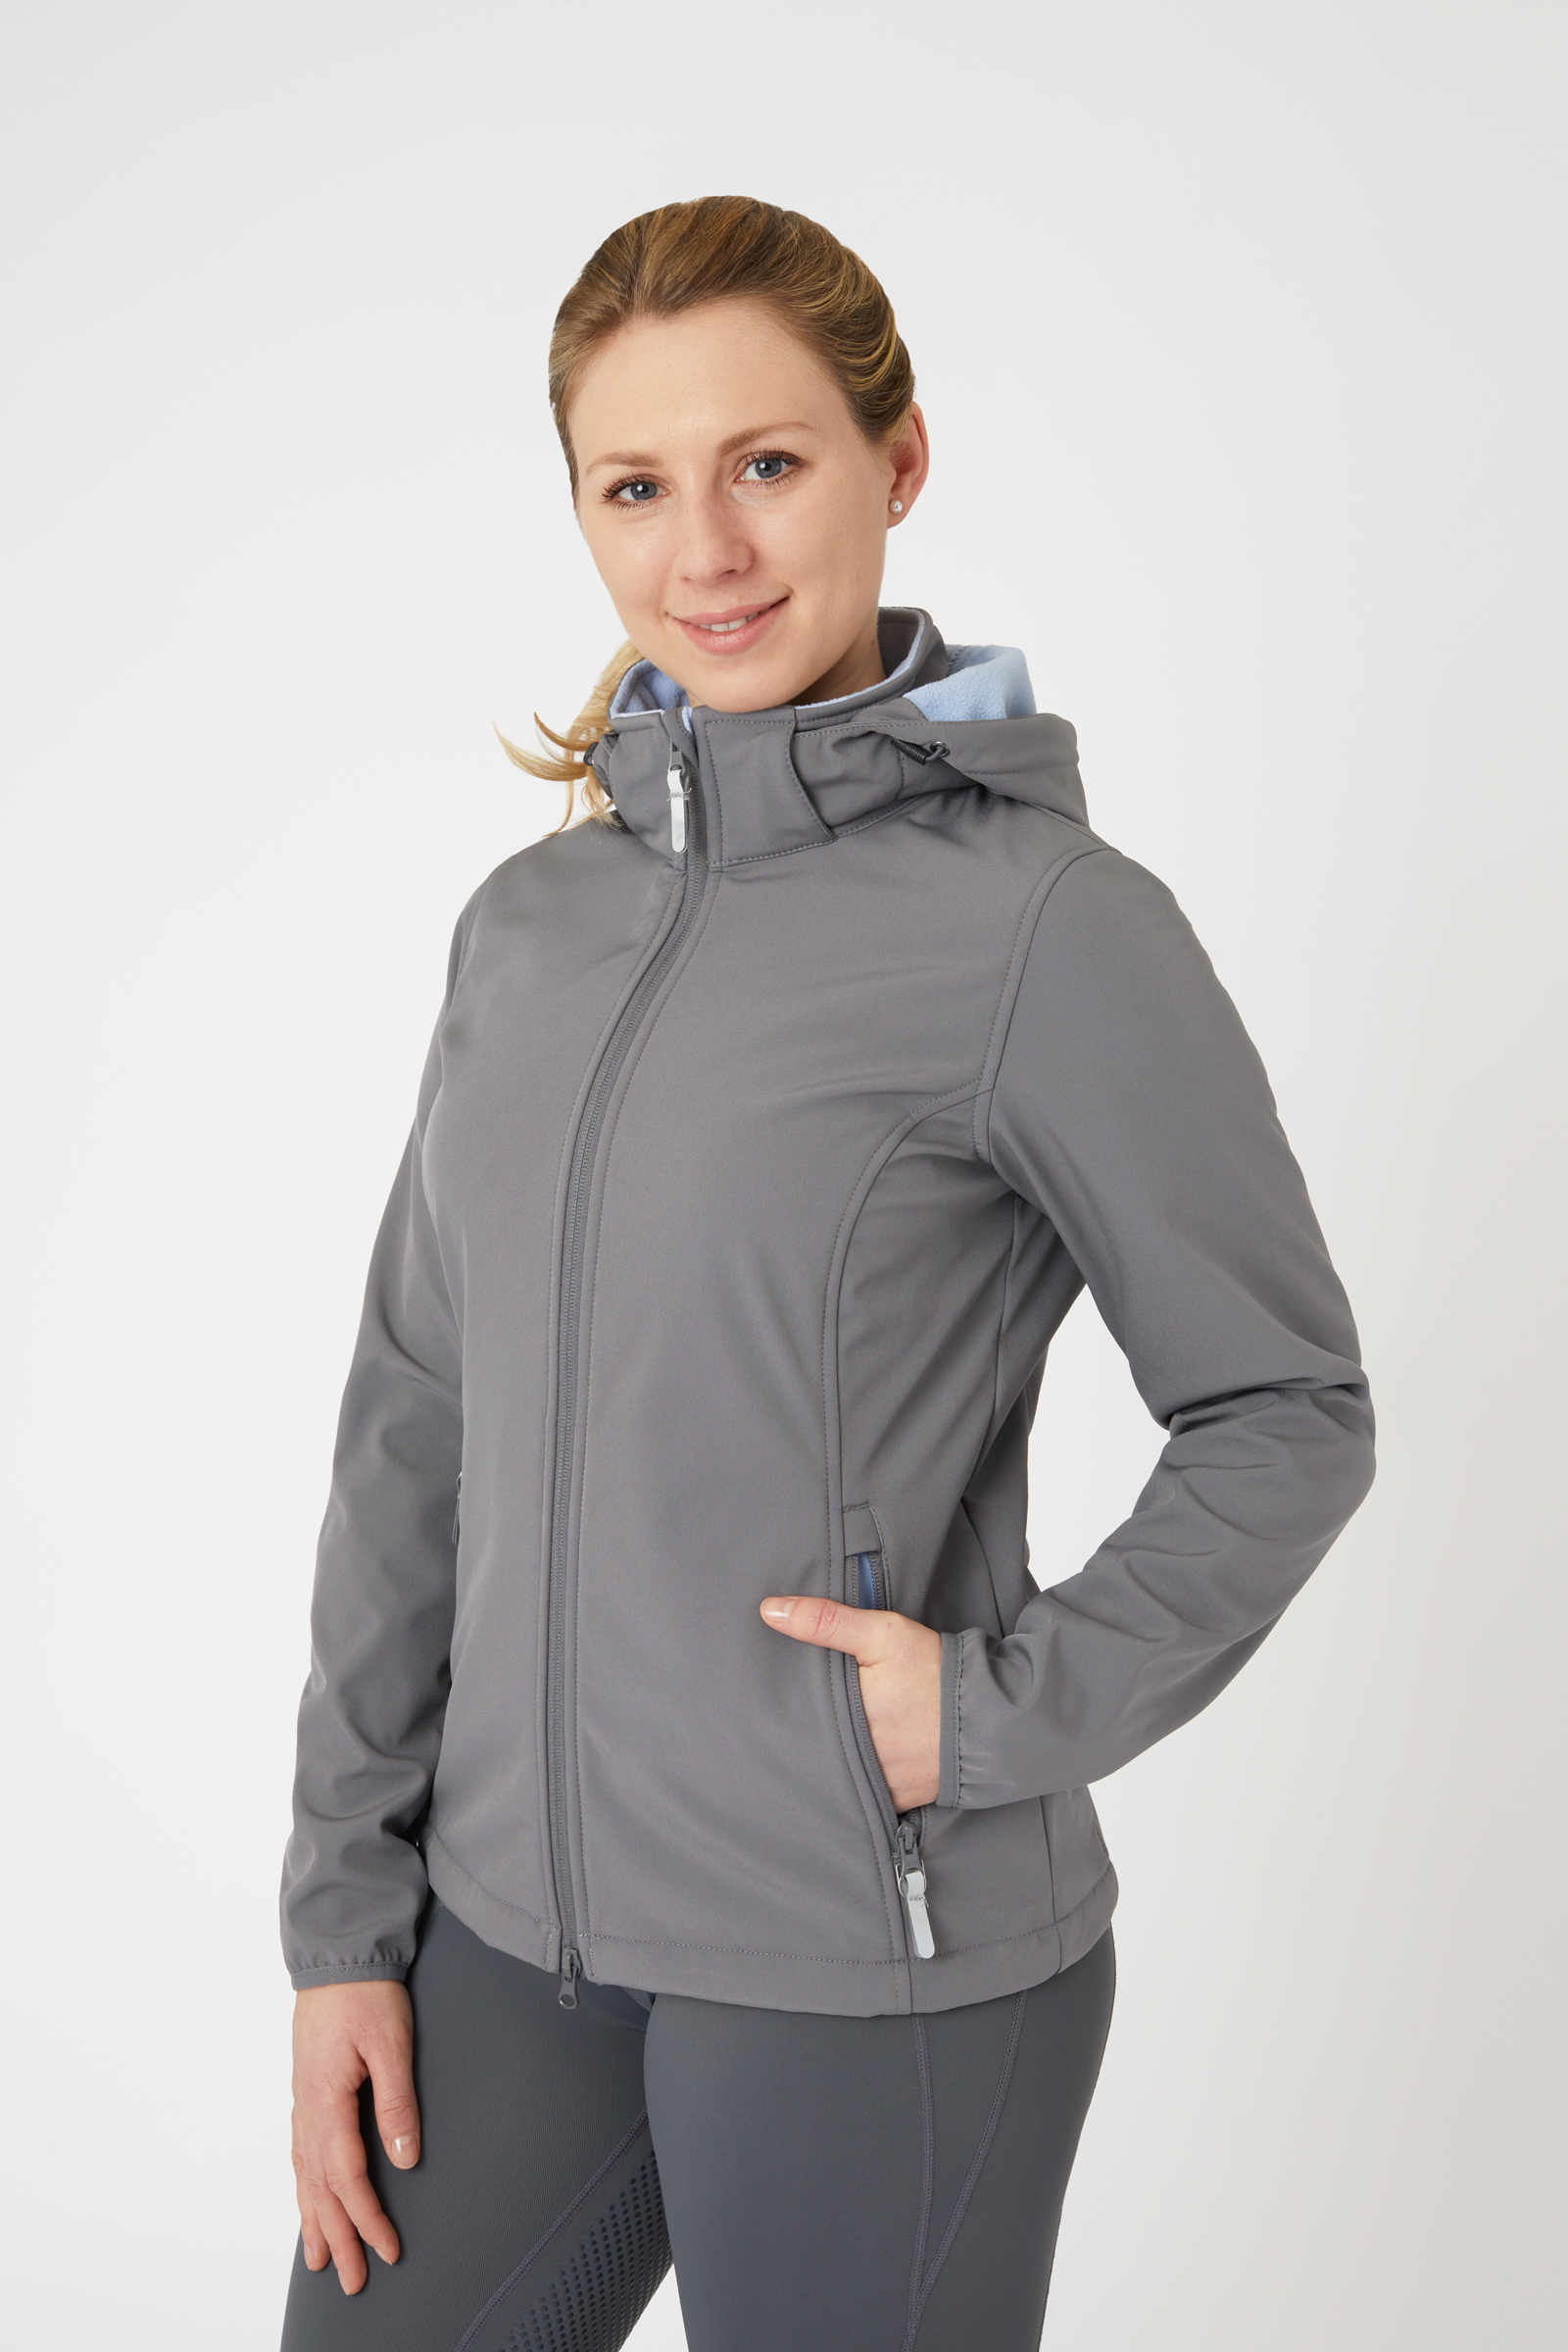 EUC Lululemon women's jacket size 8 Removable Hood